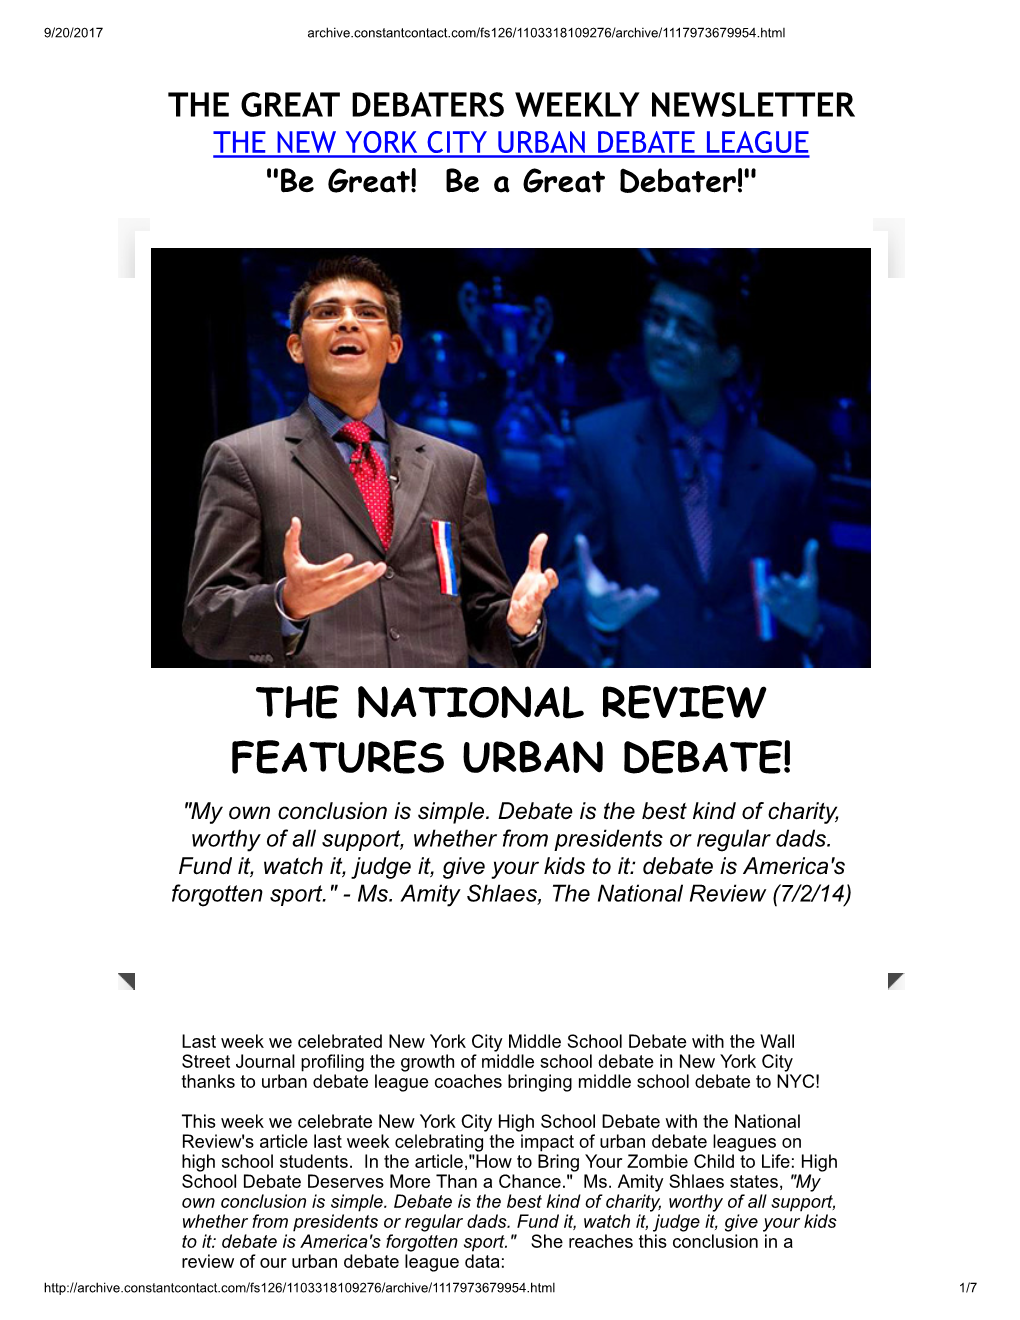 NYC Debate League News 7-19-14